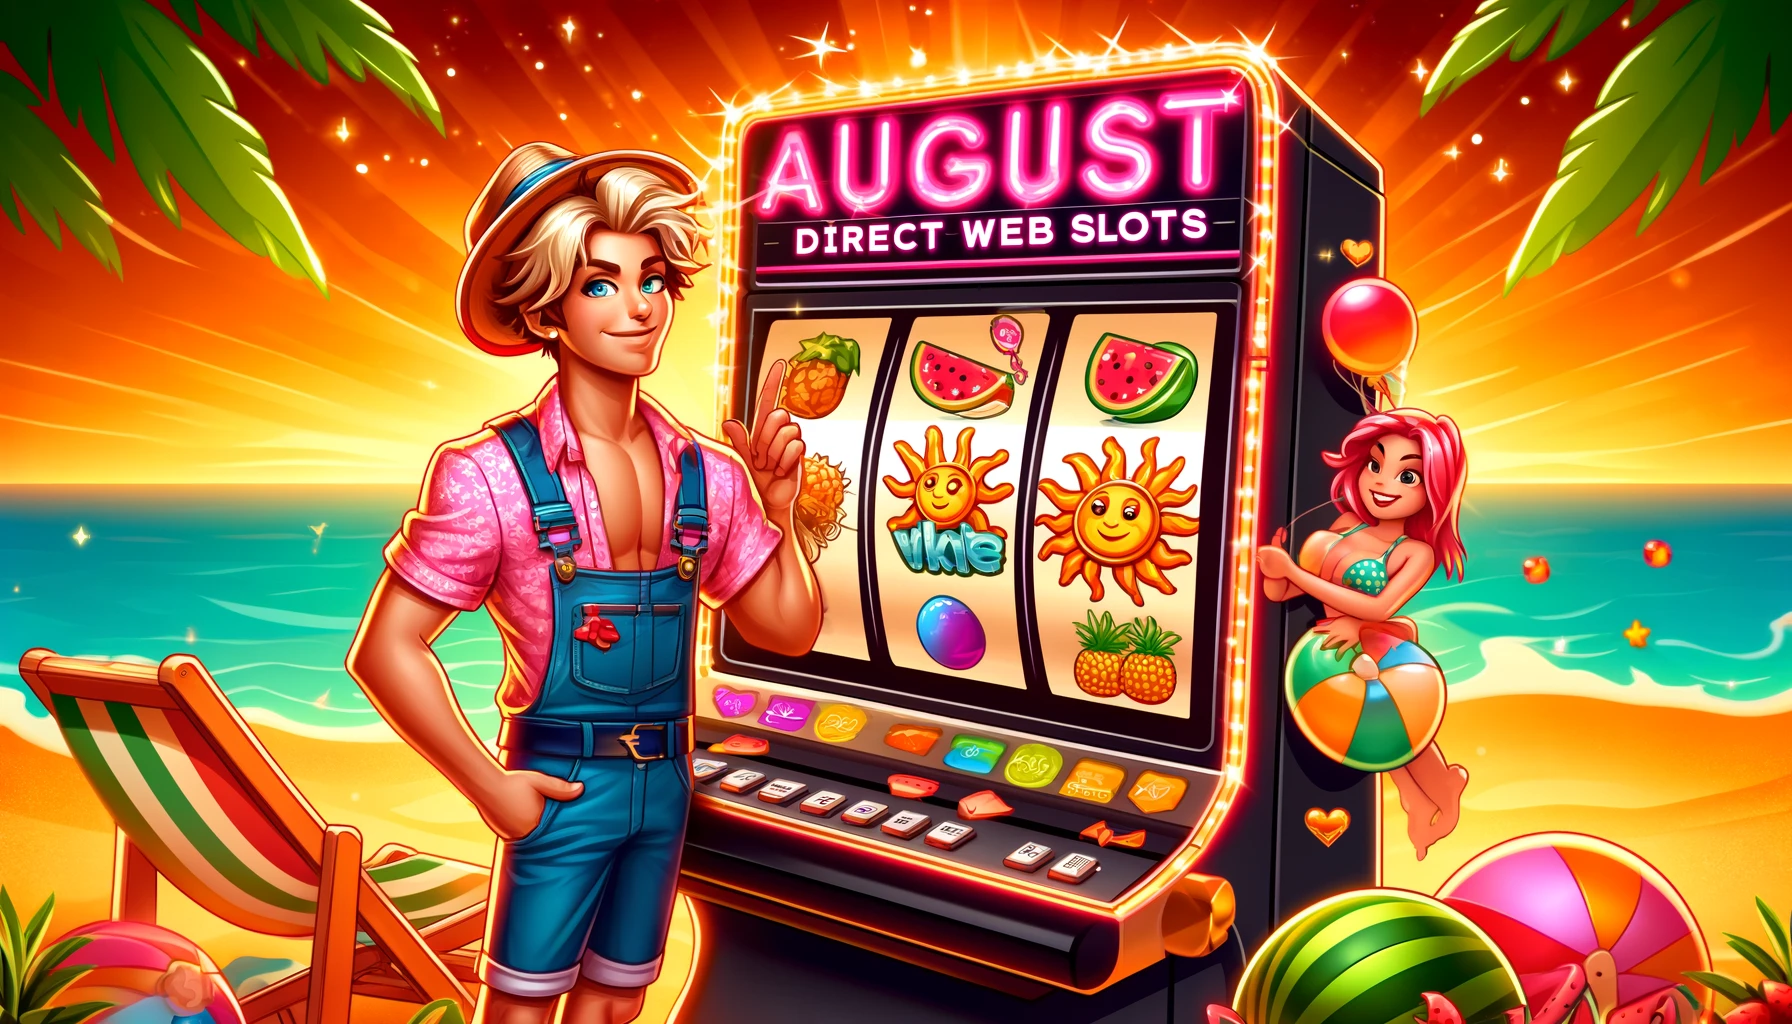 August slots, direct web slots